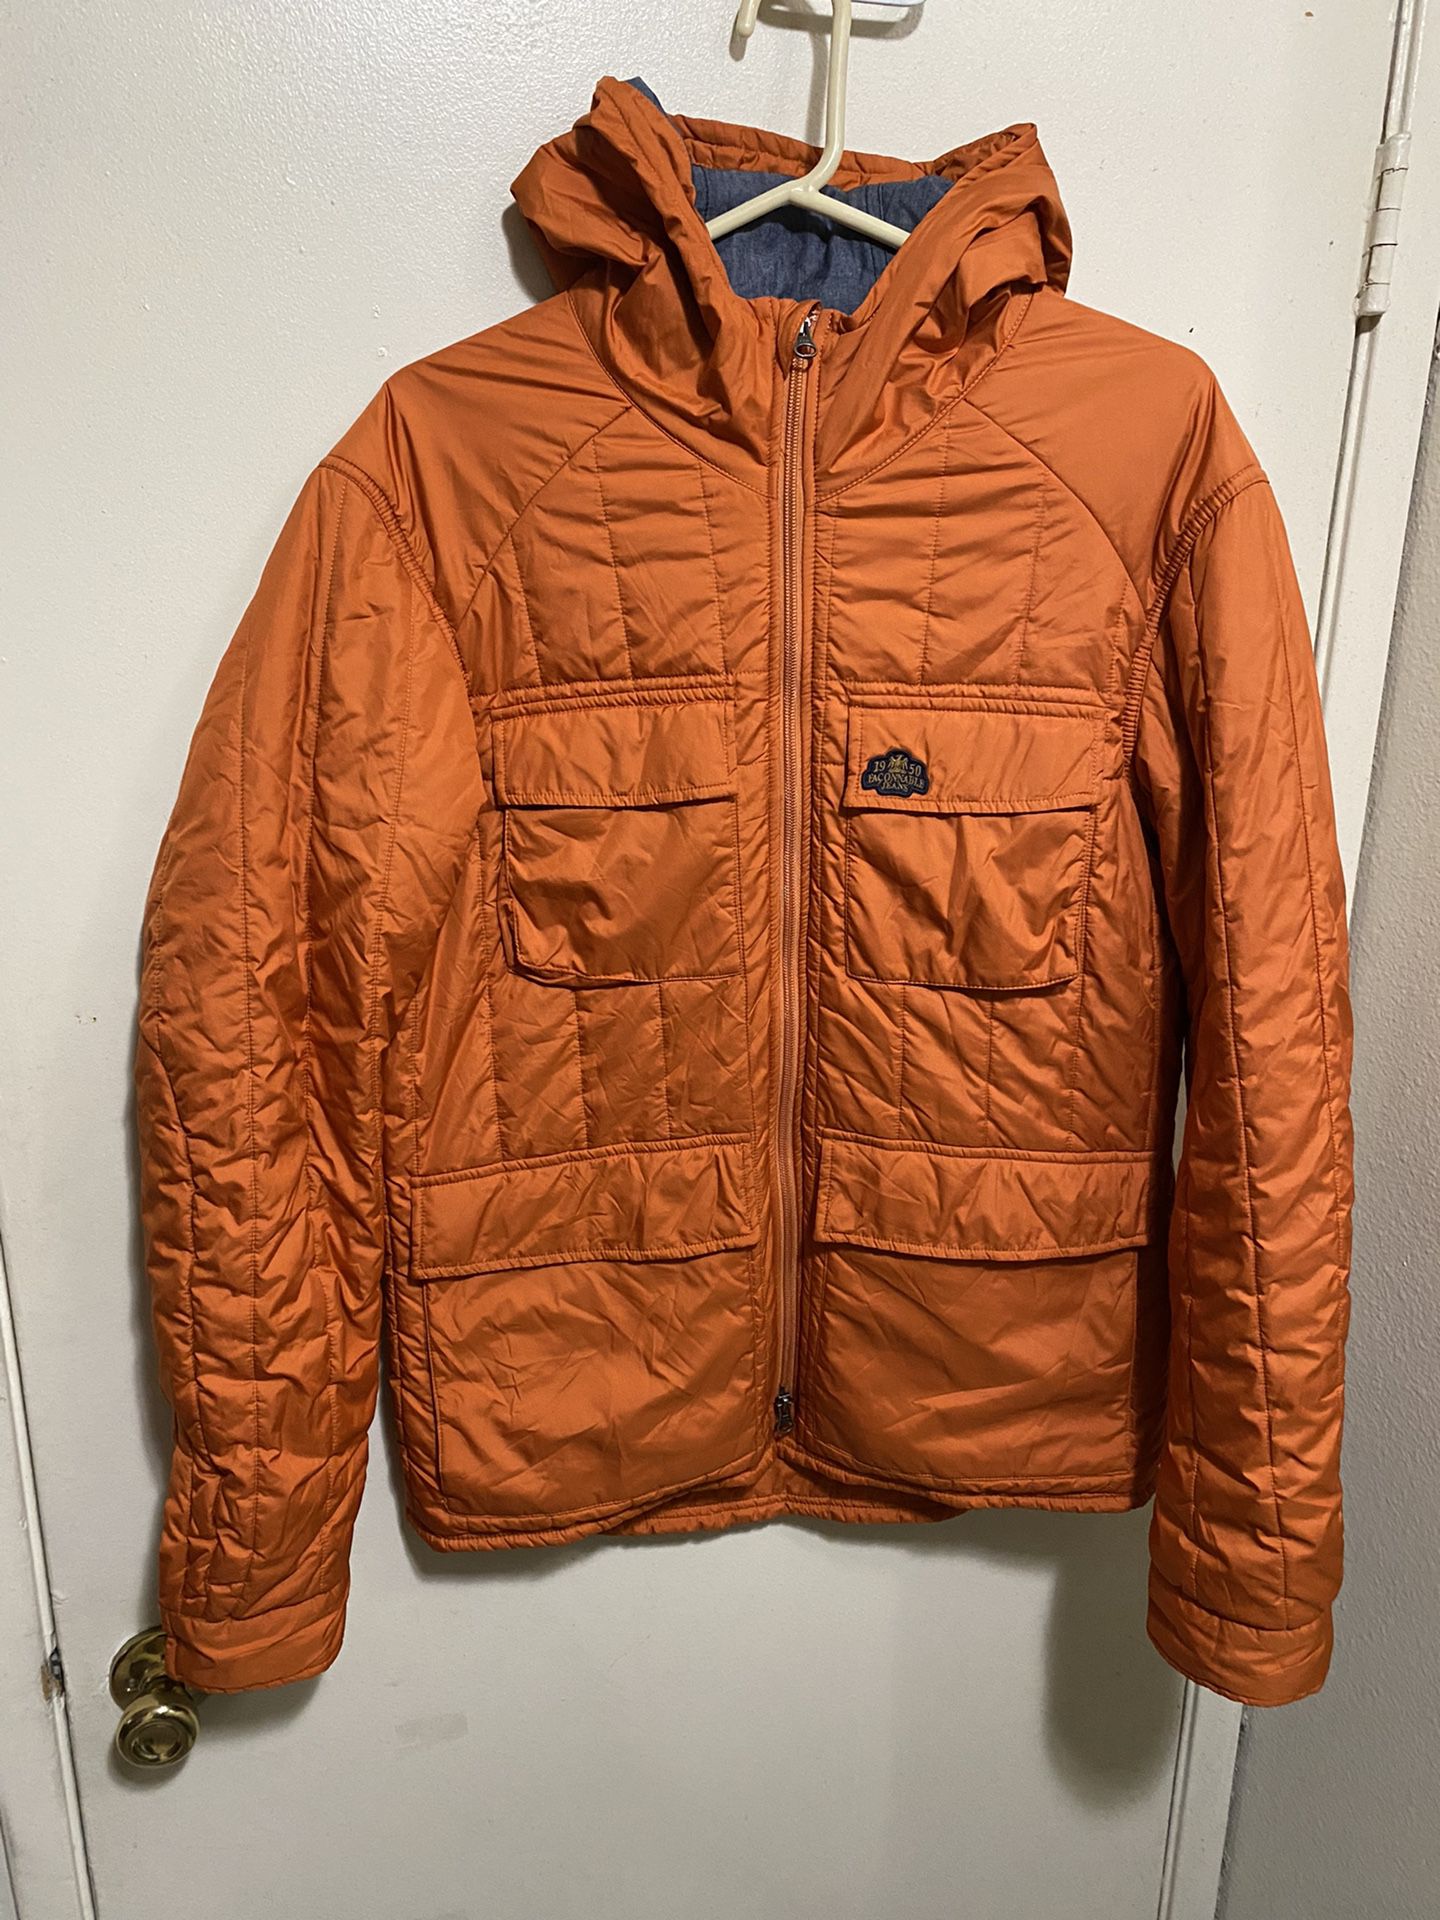 Sz Large/medium Faconnable Puffer Jacket 